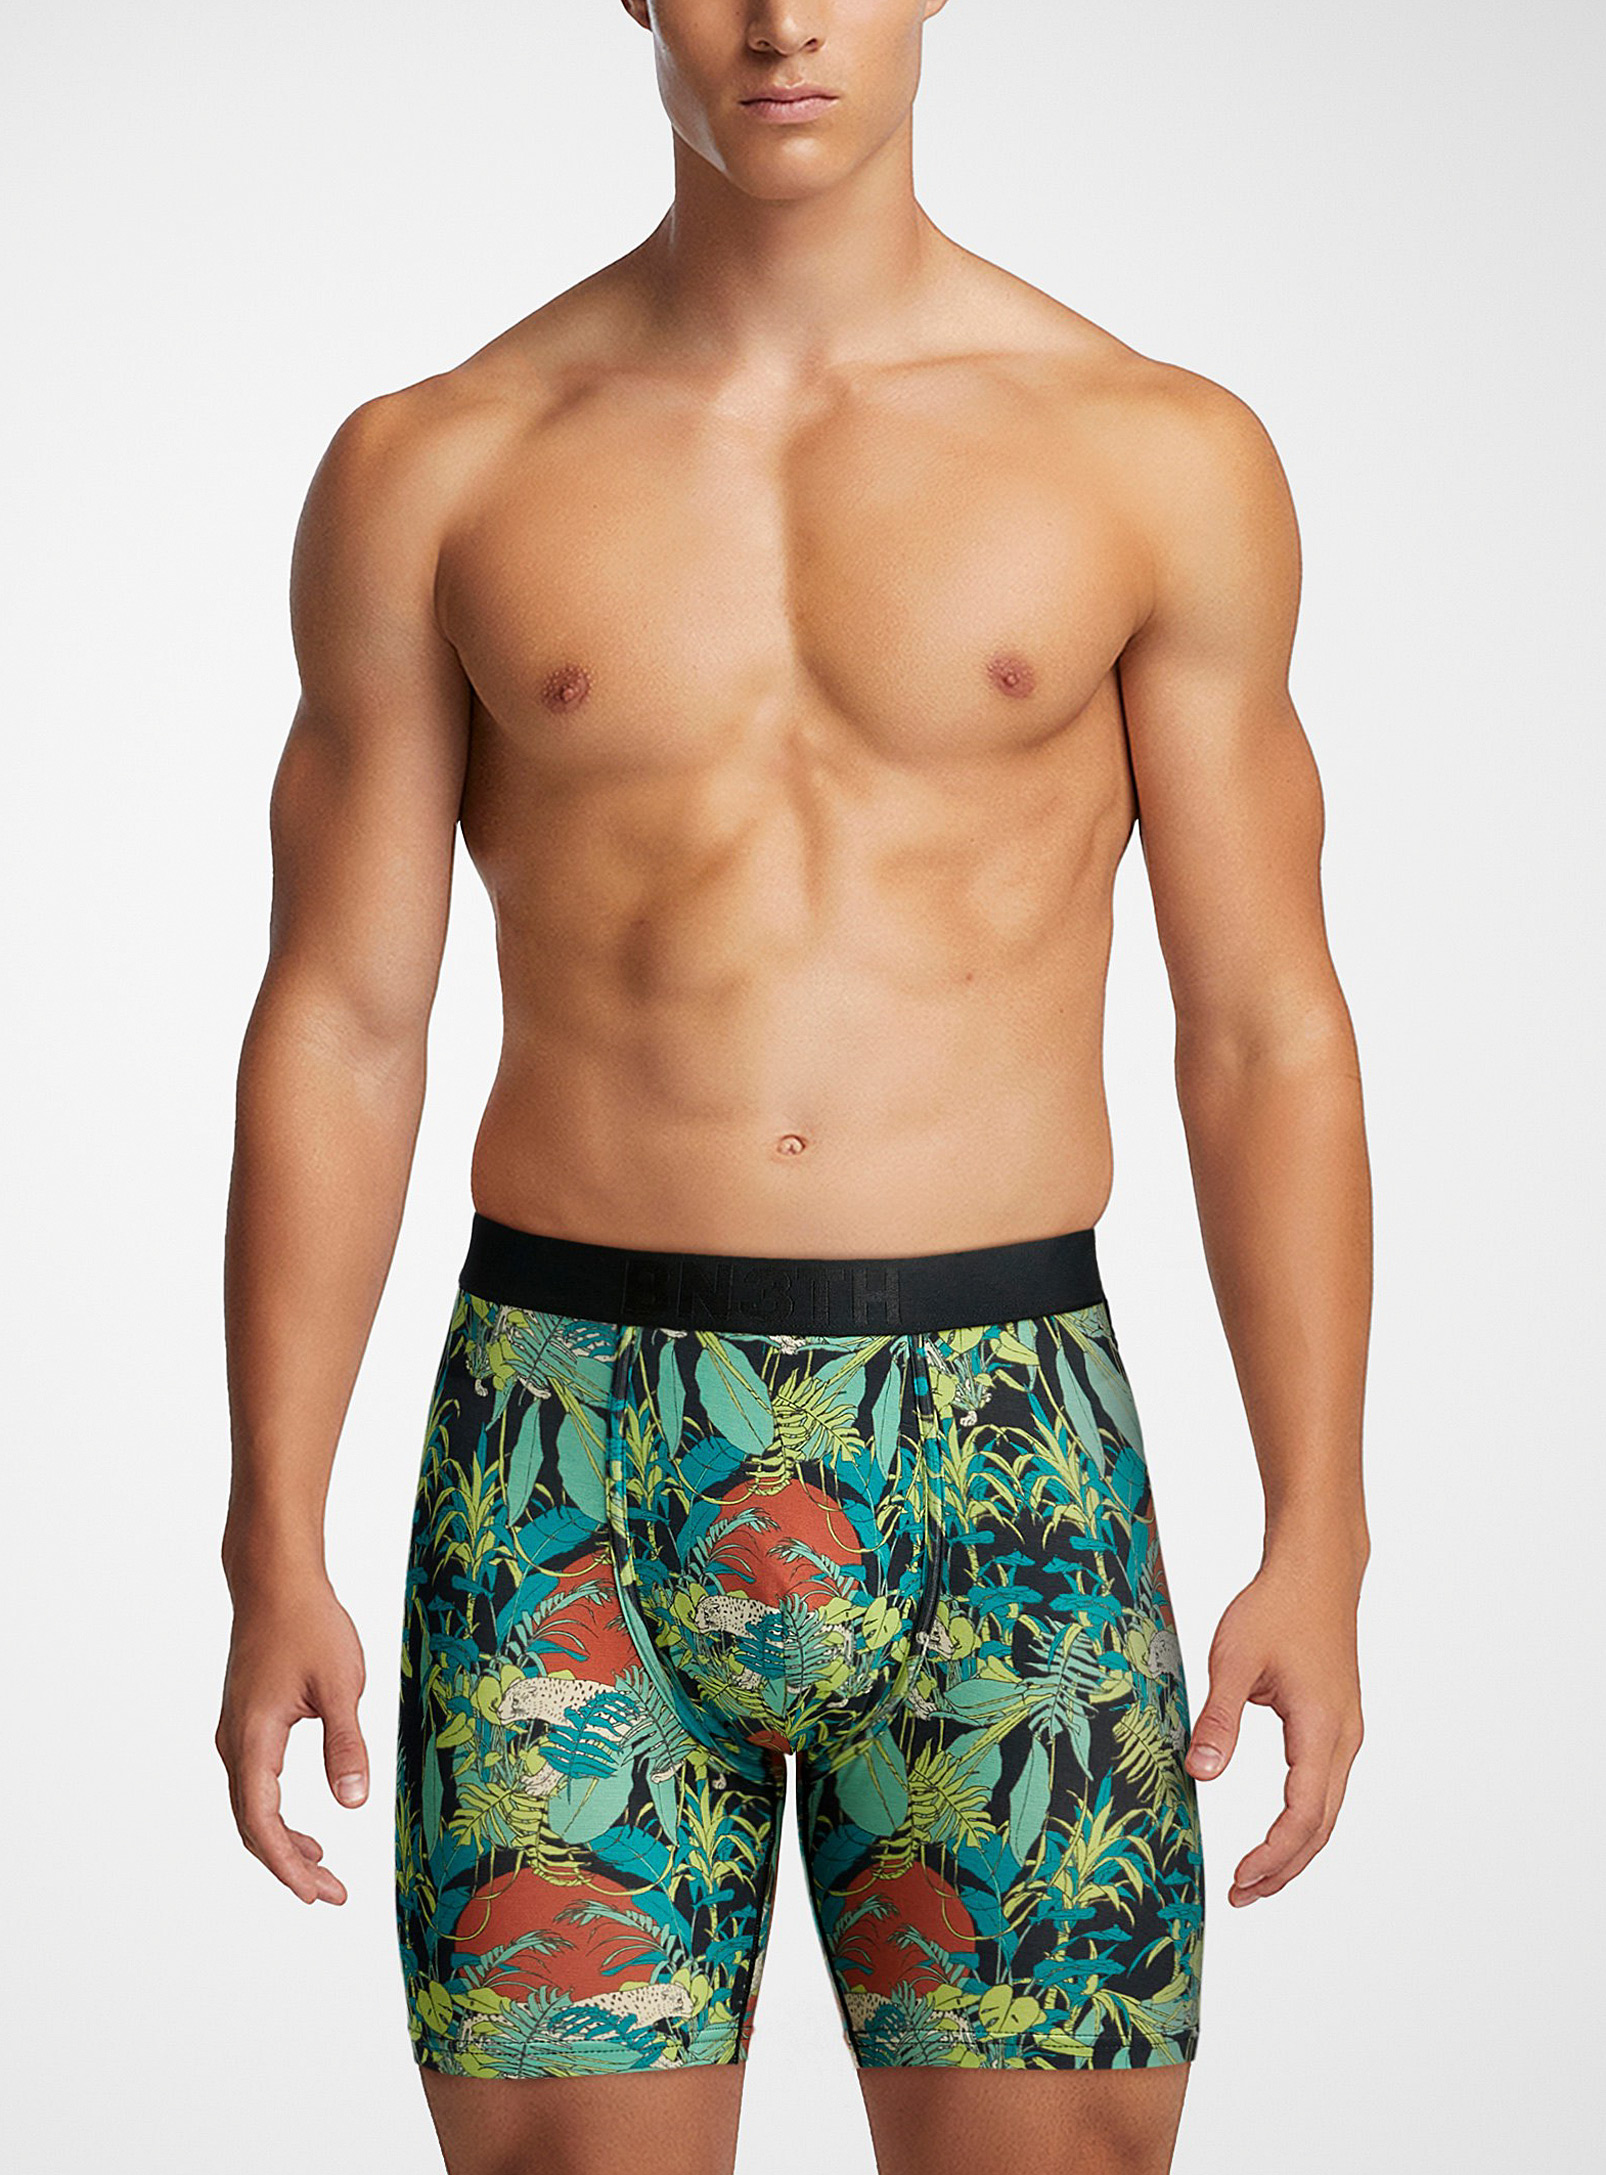 BN3TH - Men's Tropical jungle boxer brief